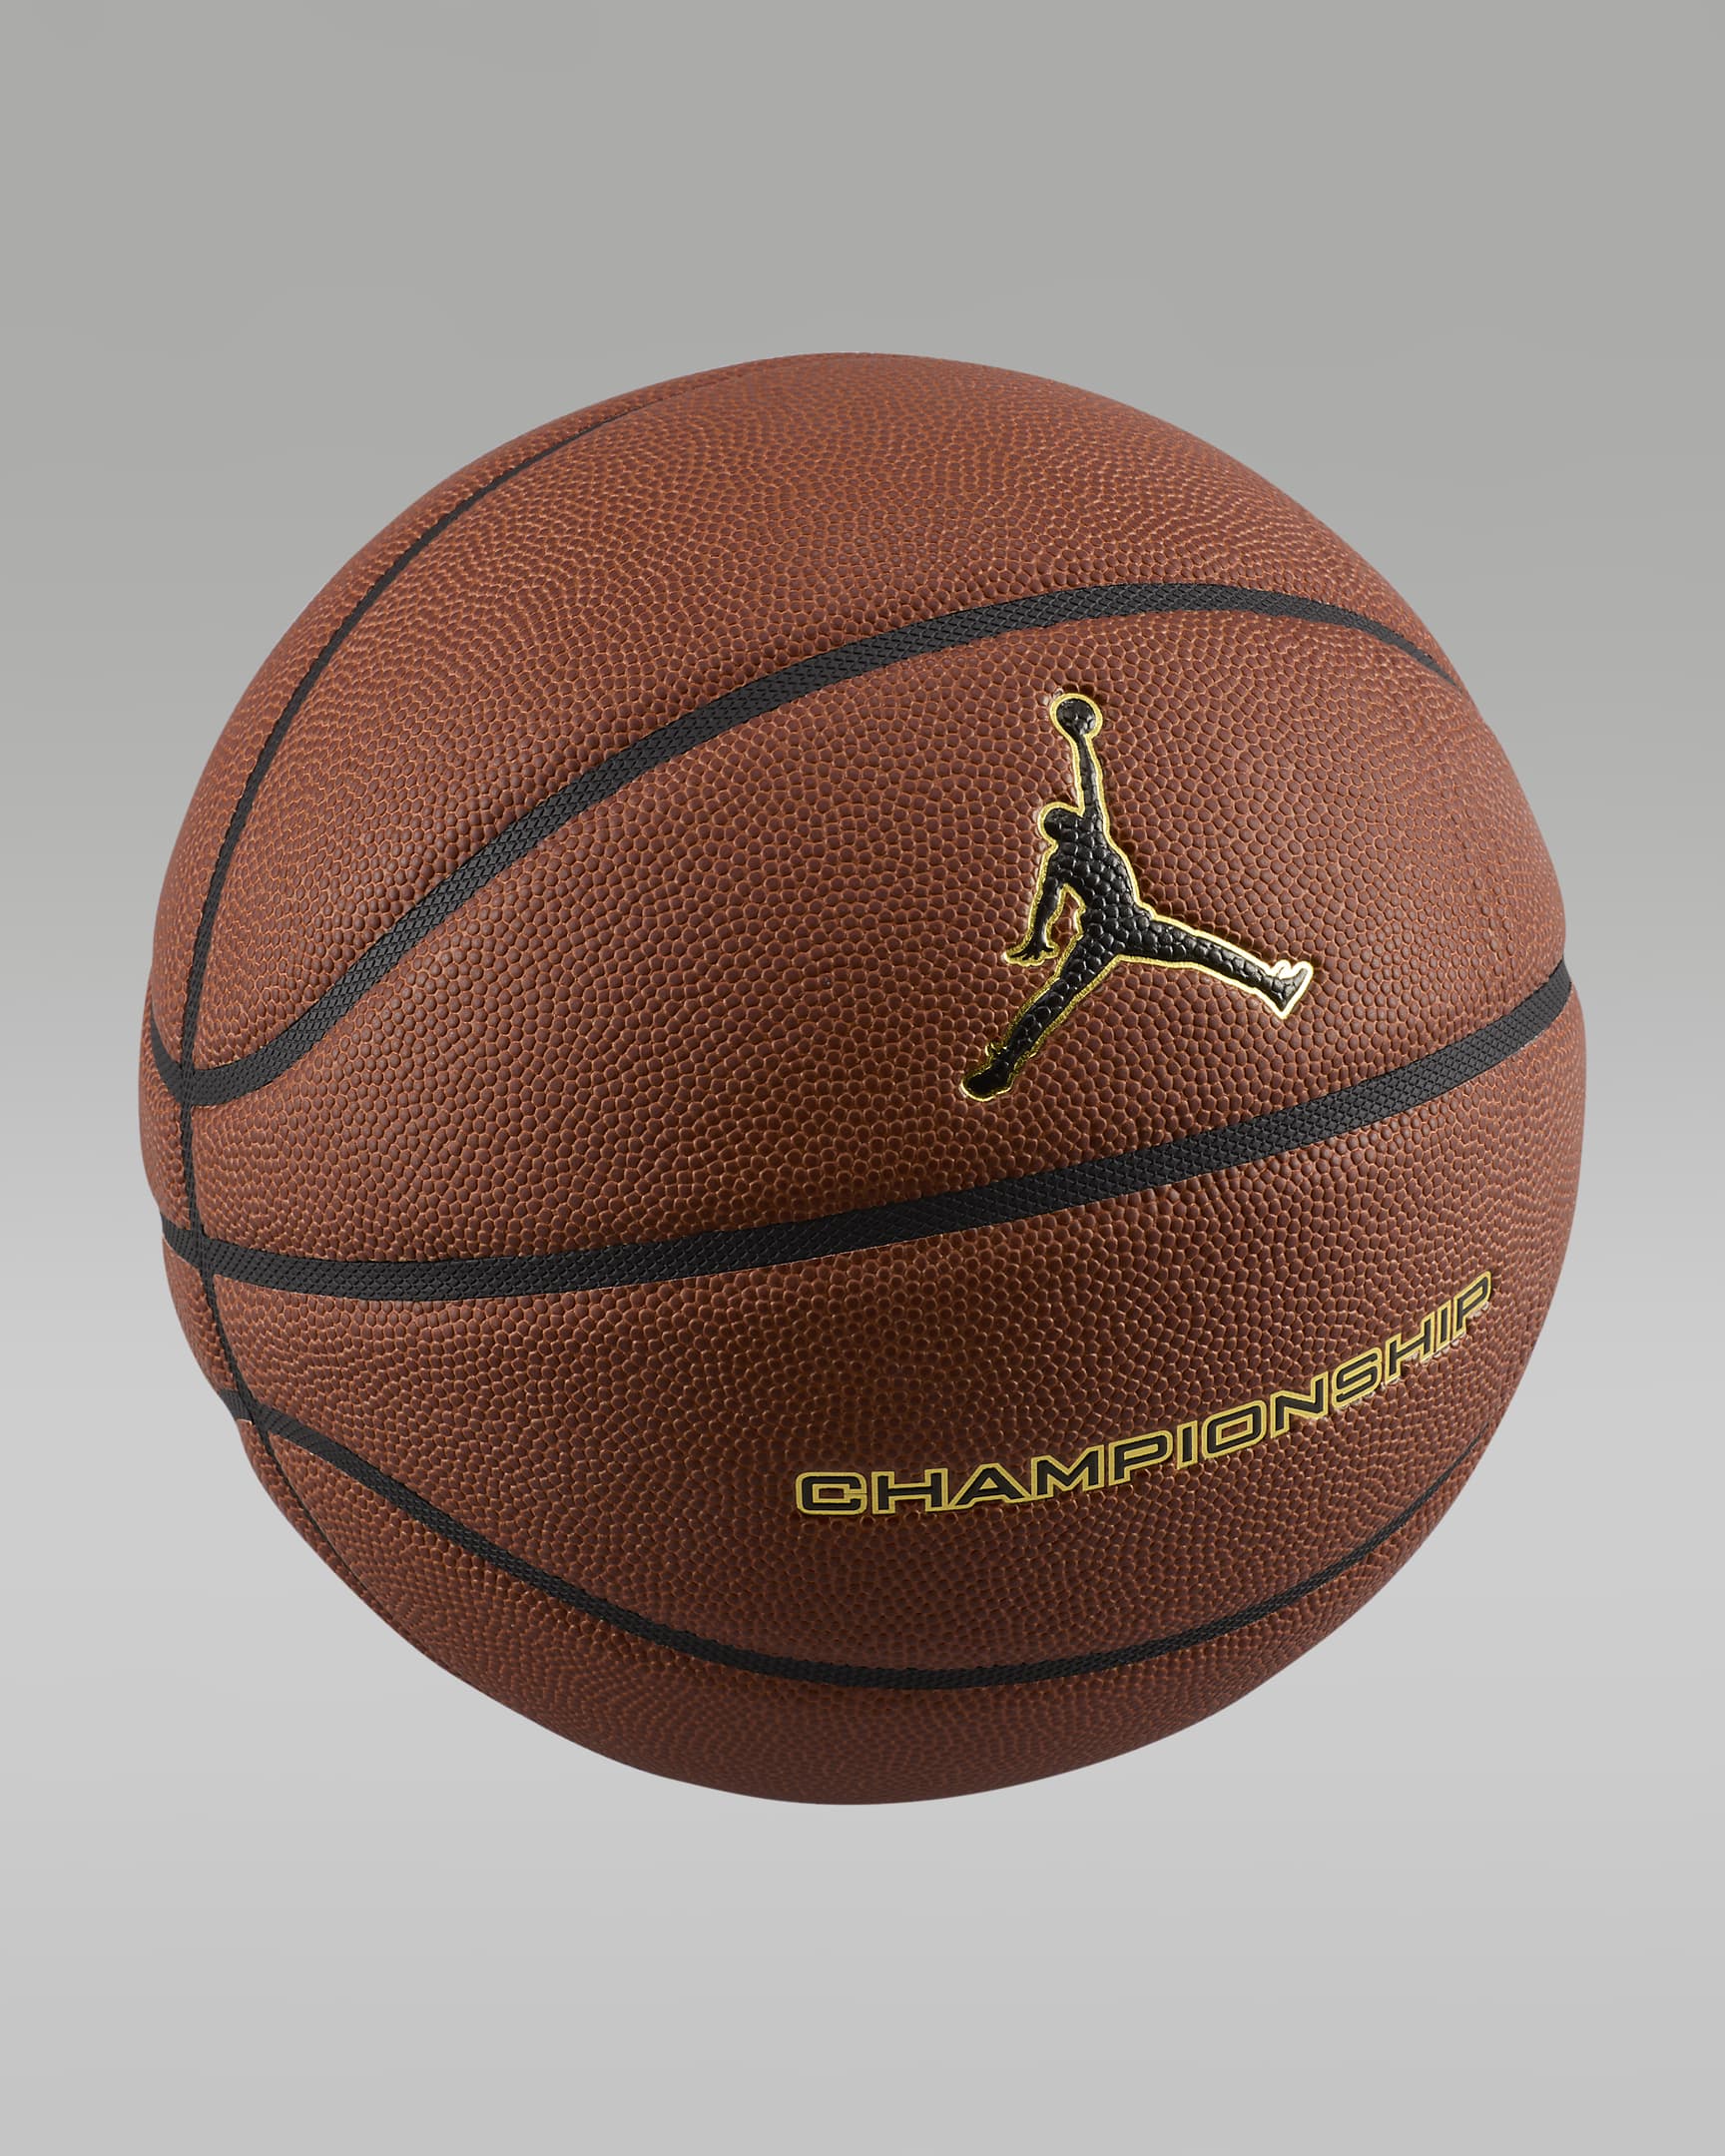 Jordan Basketball (Deflated) - Amber Court/Black/Metallic Gold/Black